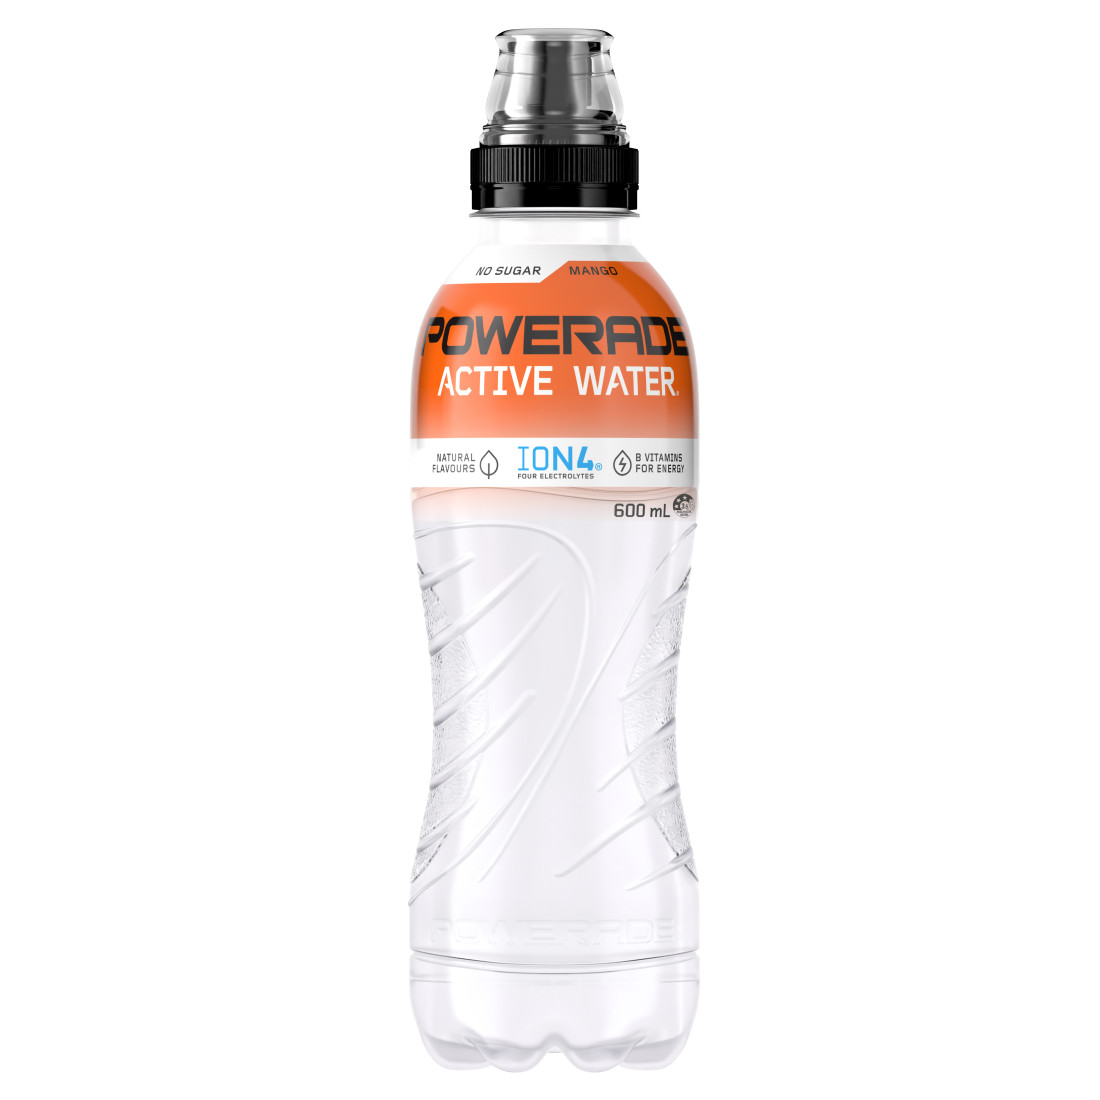 Powerade Active Water Mango bottle